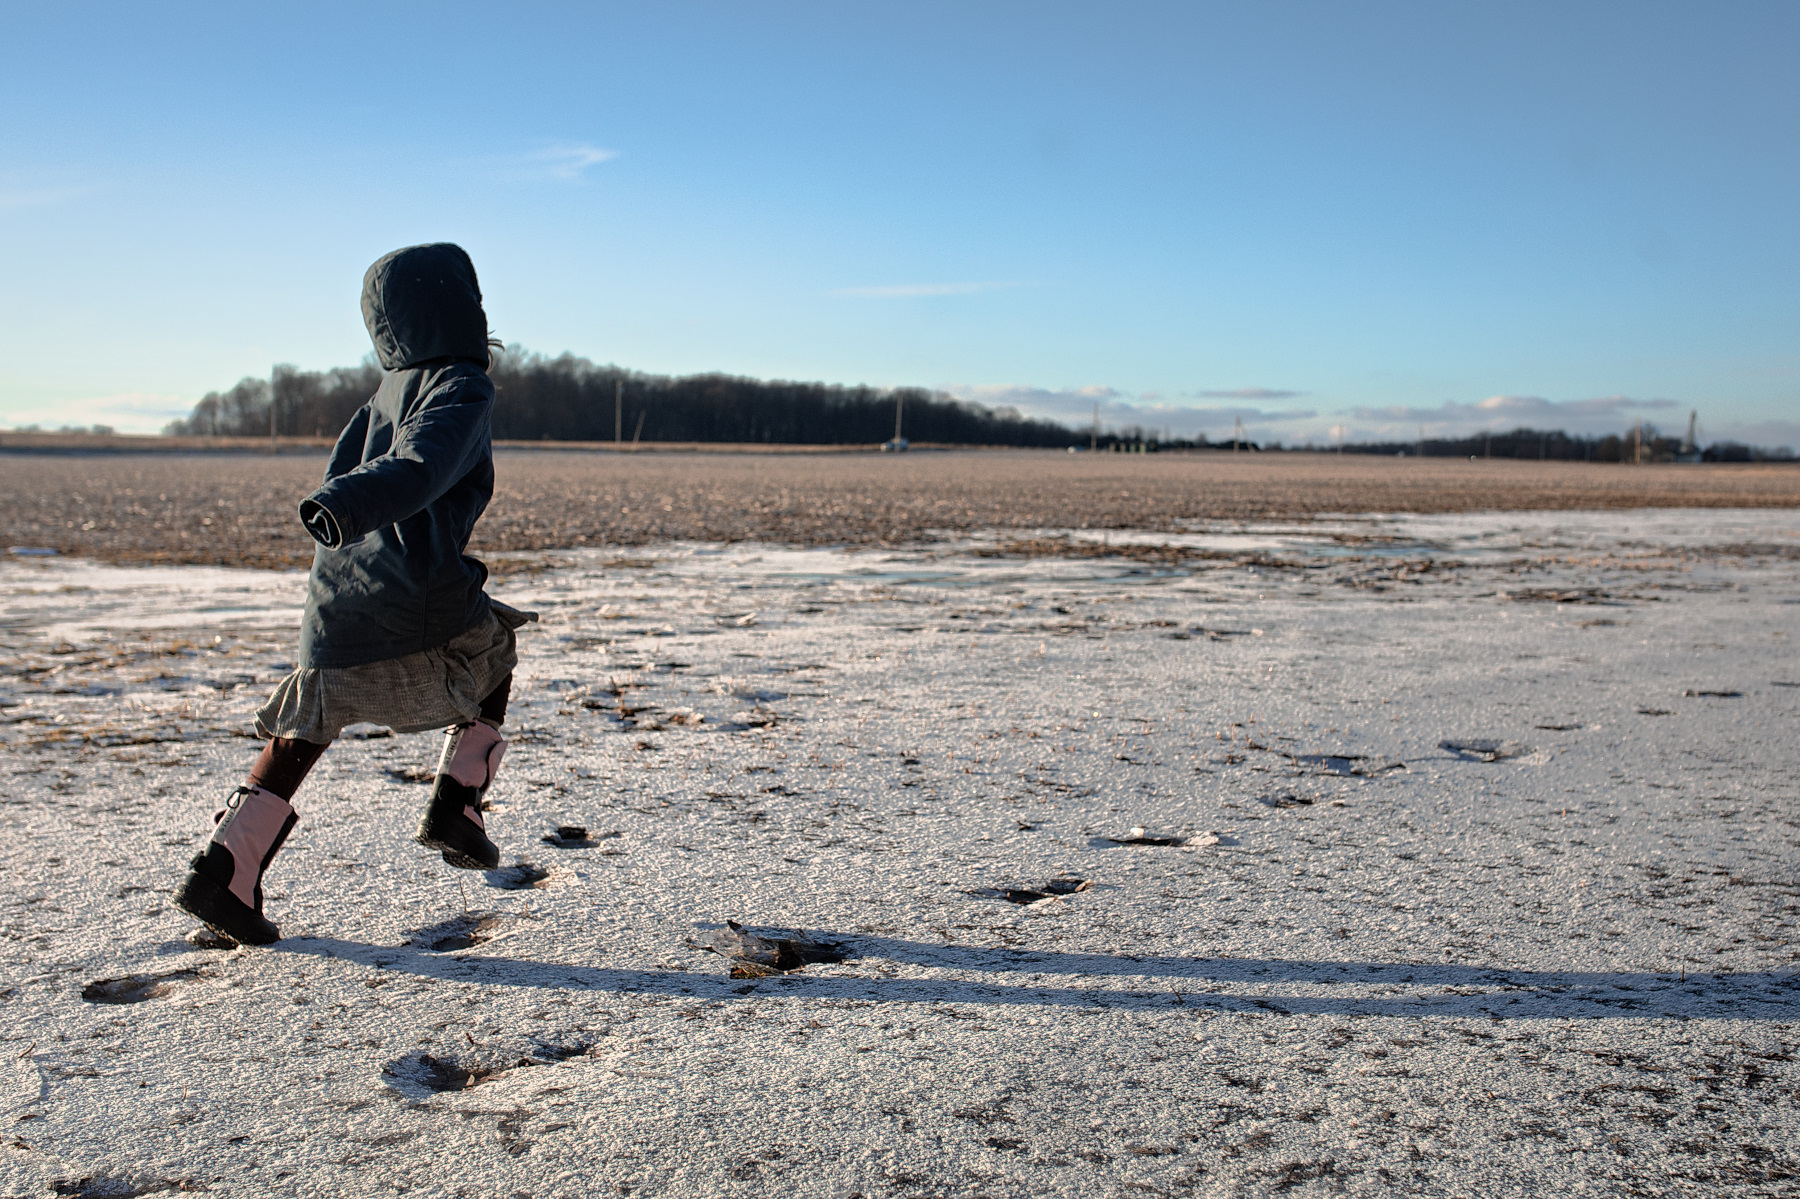 Boys Girls Kids Cute Snow Boots Waterproof Slip Resistant Outdoor Winter  Boots Shoes Little Kid/Big Kid